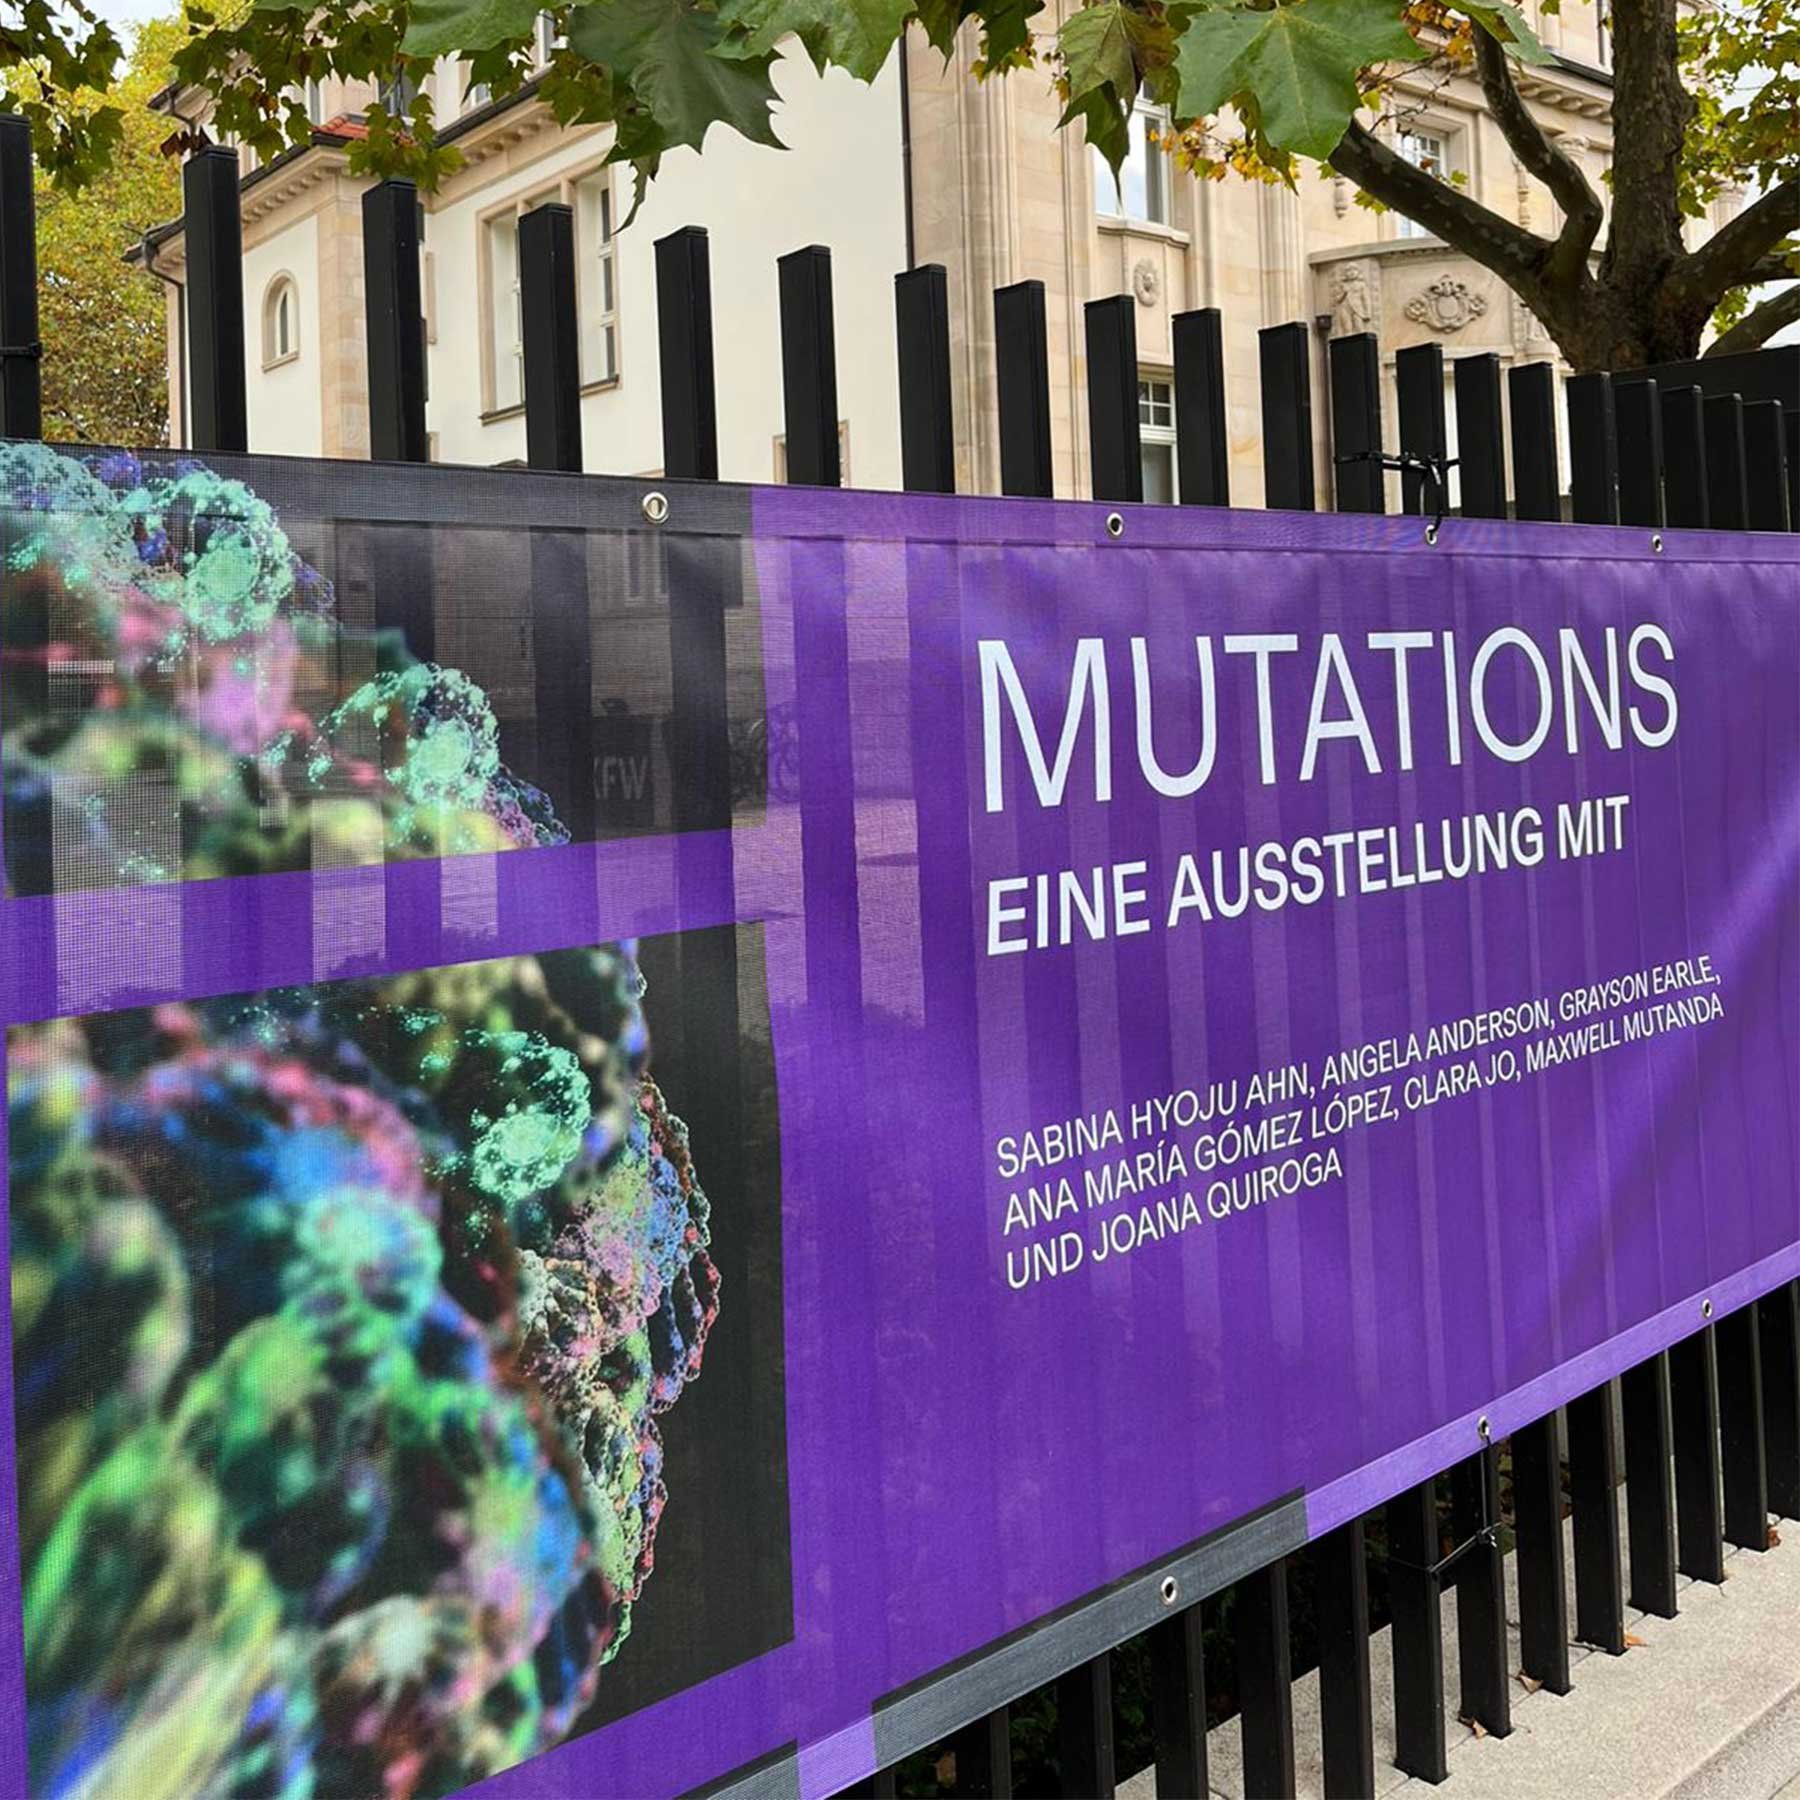 Bureau-Mitte-069-KfW-Stiftung-Banner-Gestaltung-Ausstellung-Mutations.jpg